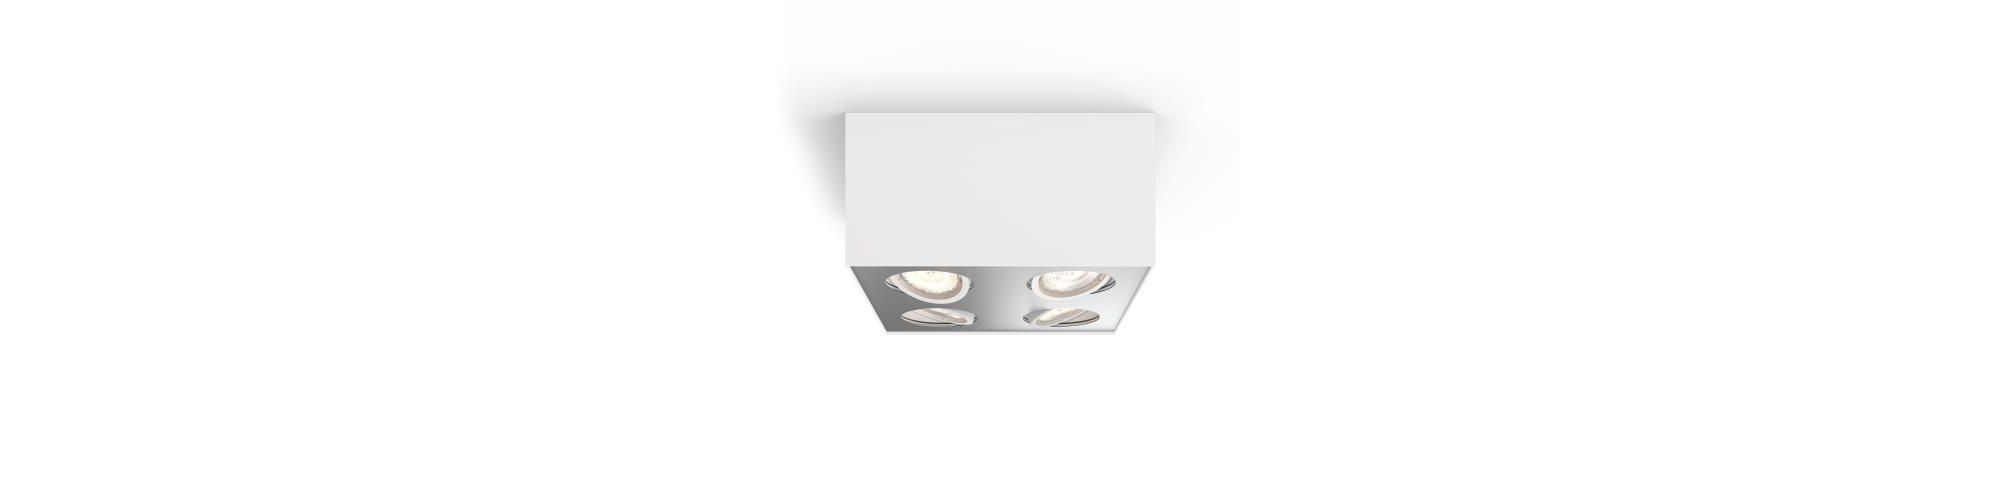 Philips myLiving Warmglow dimmable light Box quadruple spot light